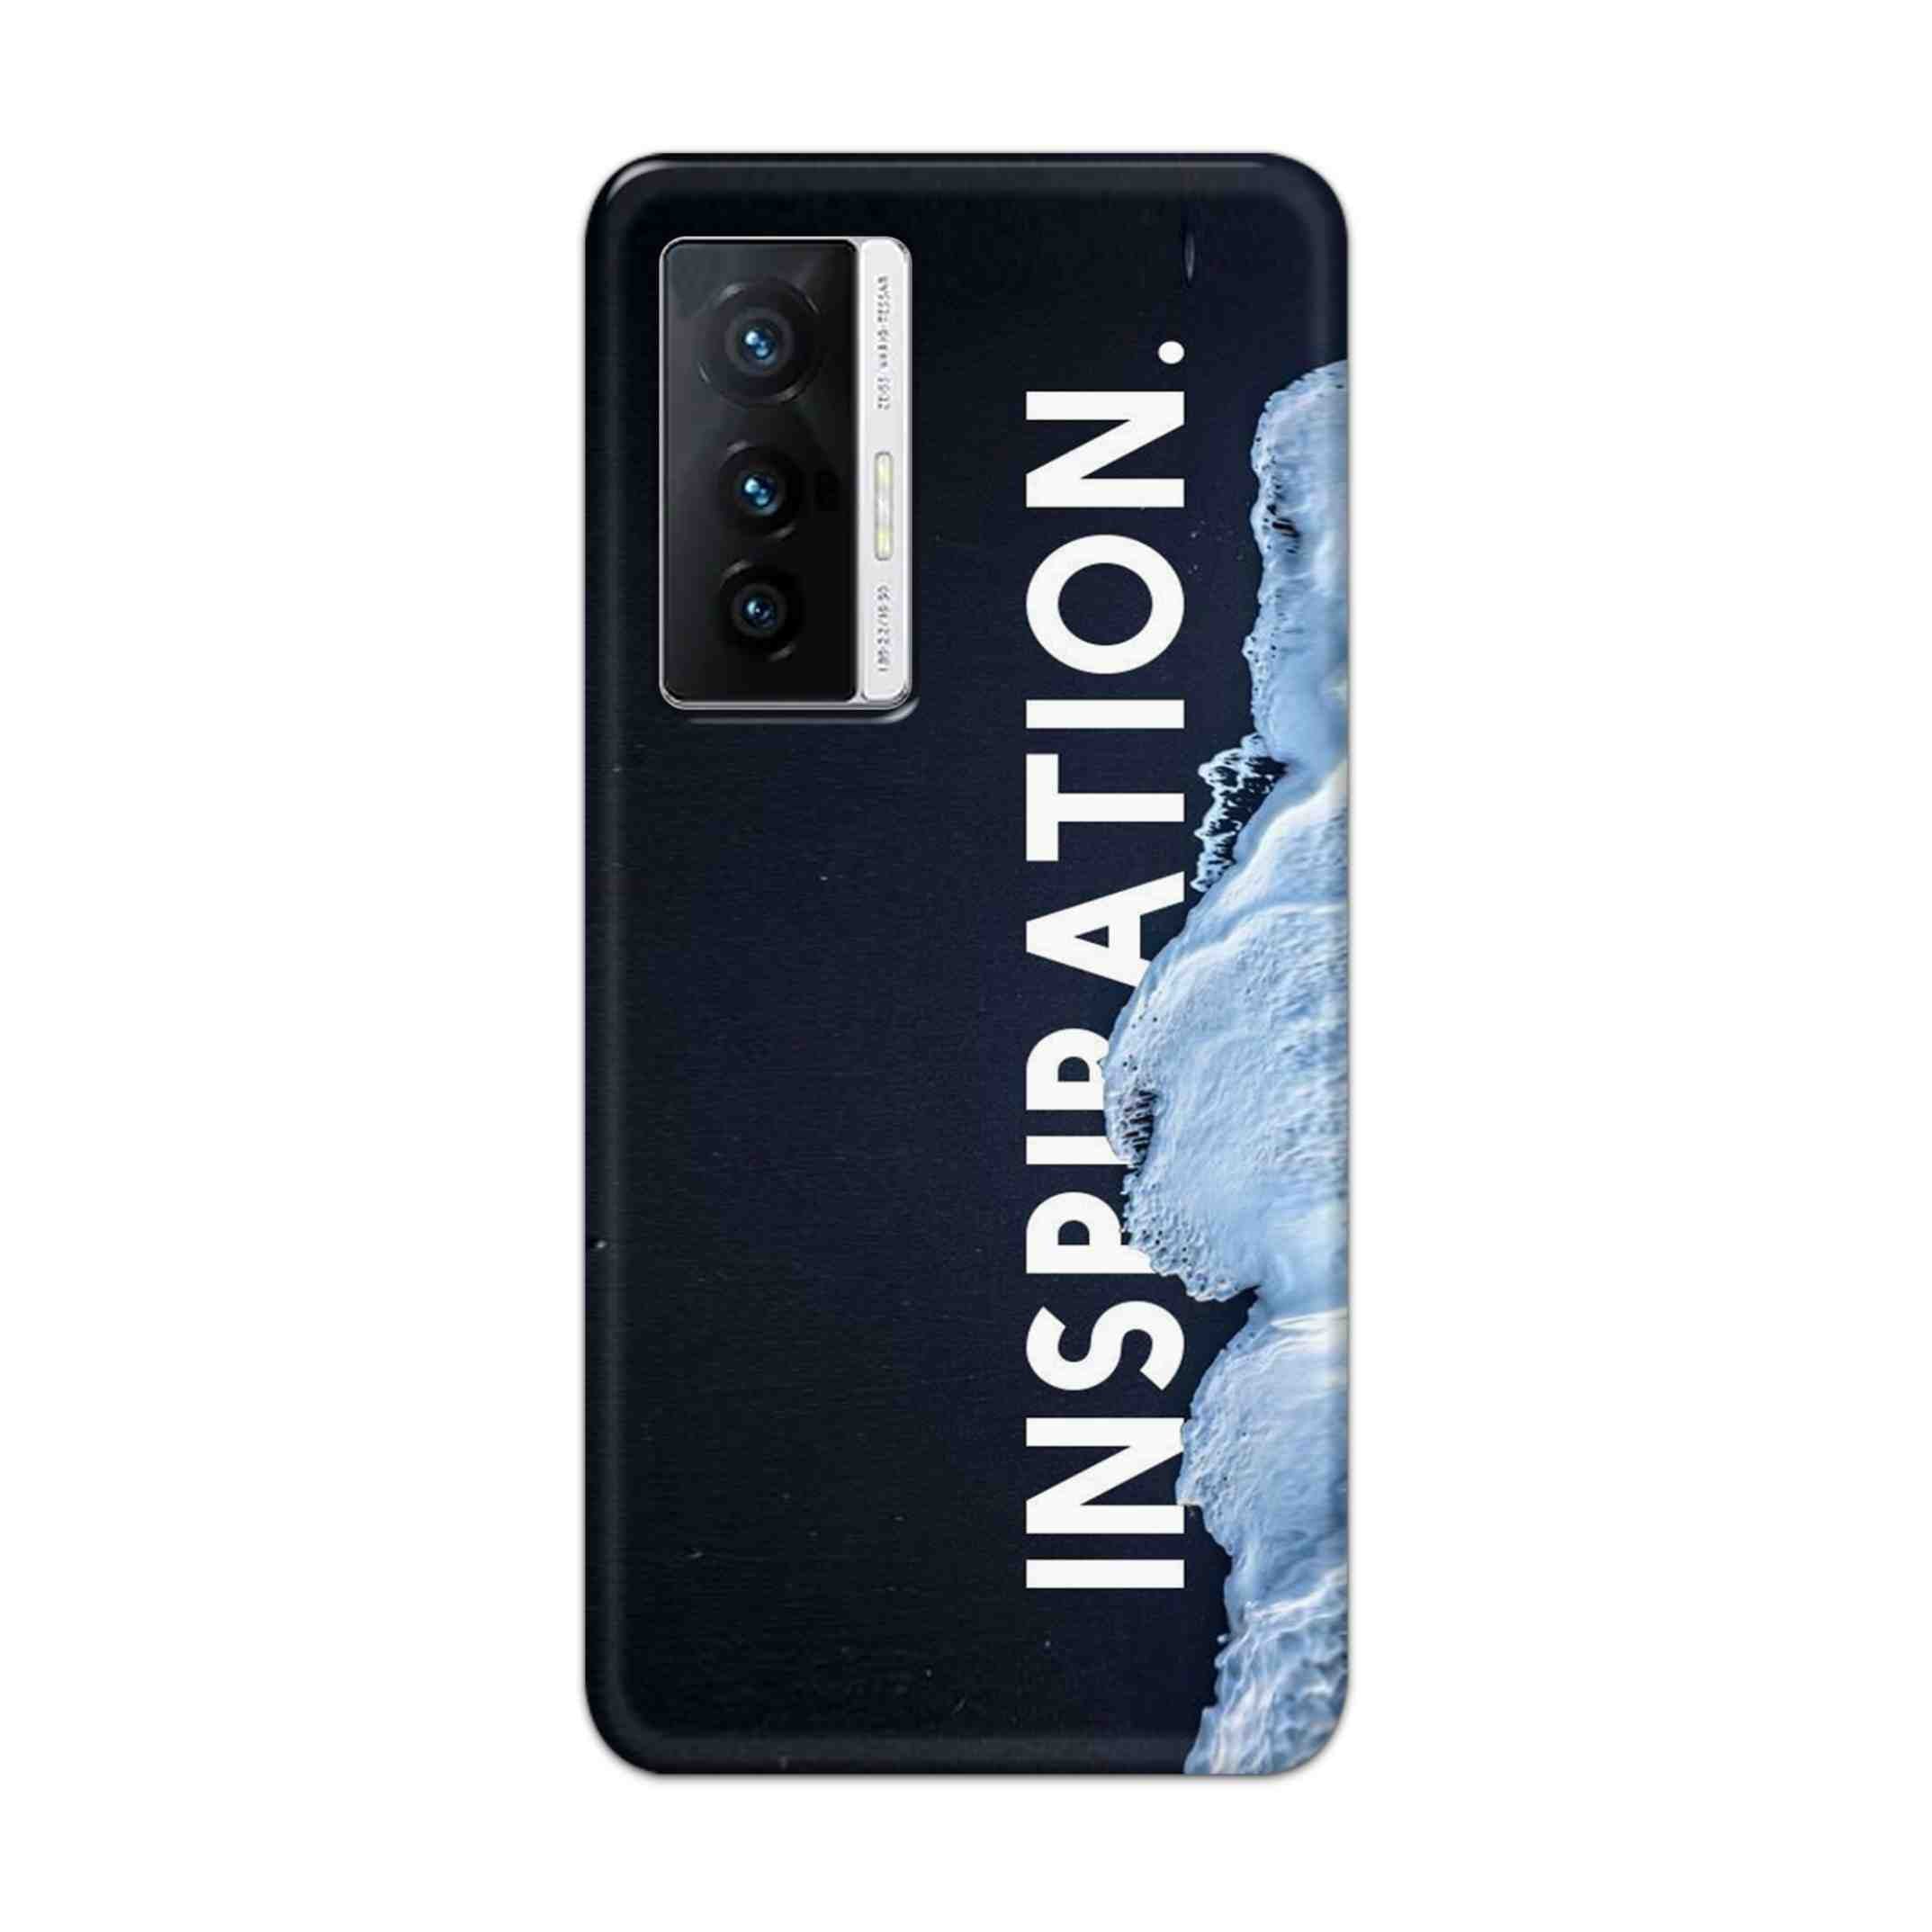 Buy Inspiration Hard Back Mobile Phone Case Cover For Vivo X70 Online